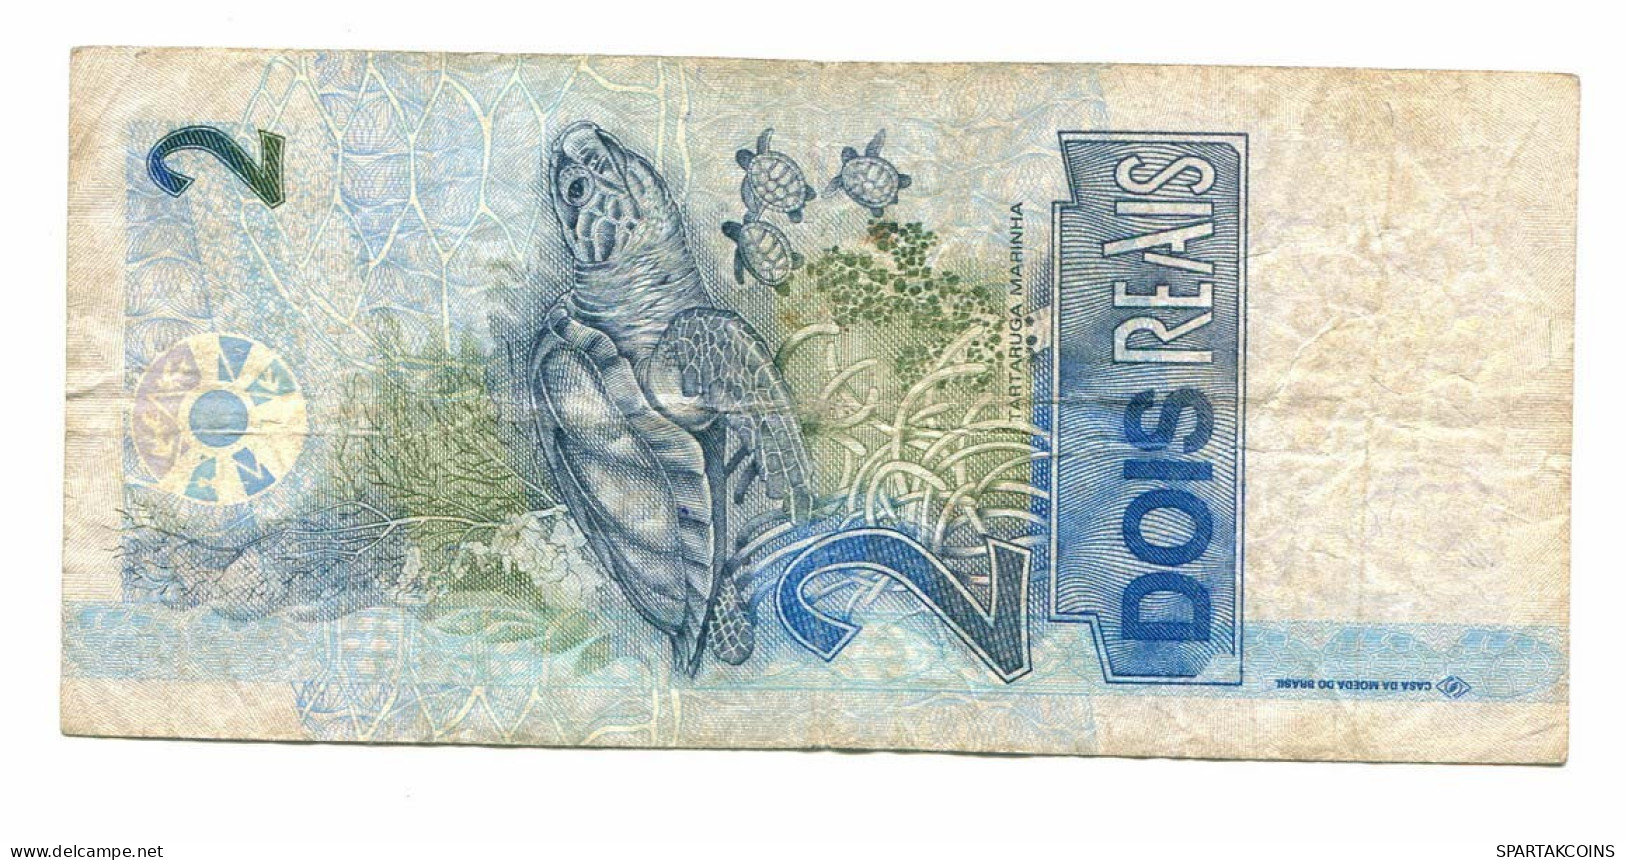 BRASIL 2 REAIS 2001 Tartaruga Paper Money Banknote #P10829.4 - [11] Local Banknote Issues